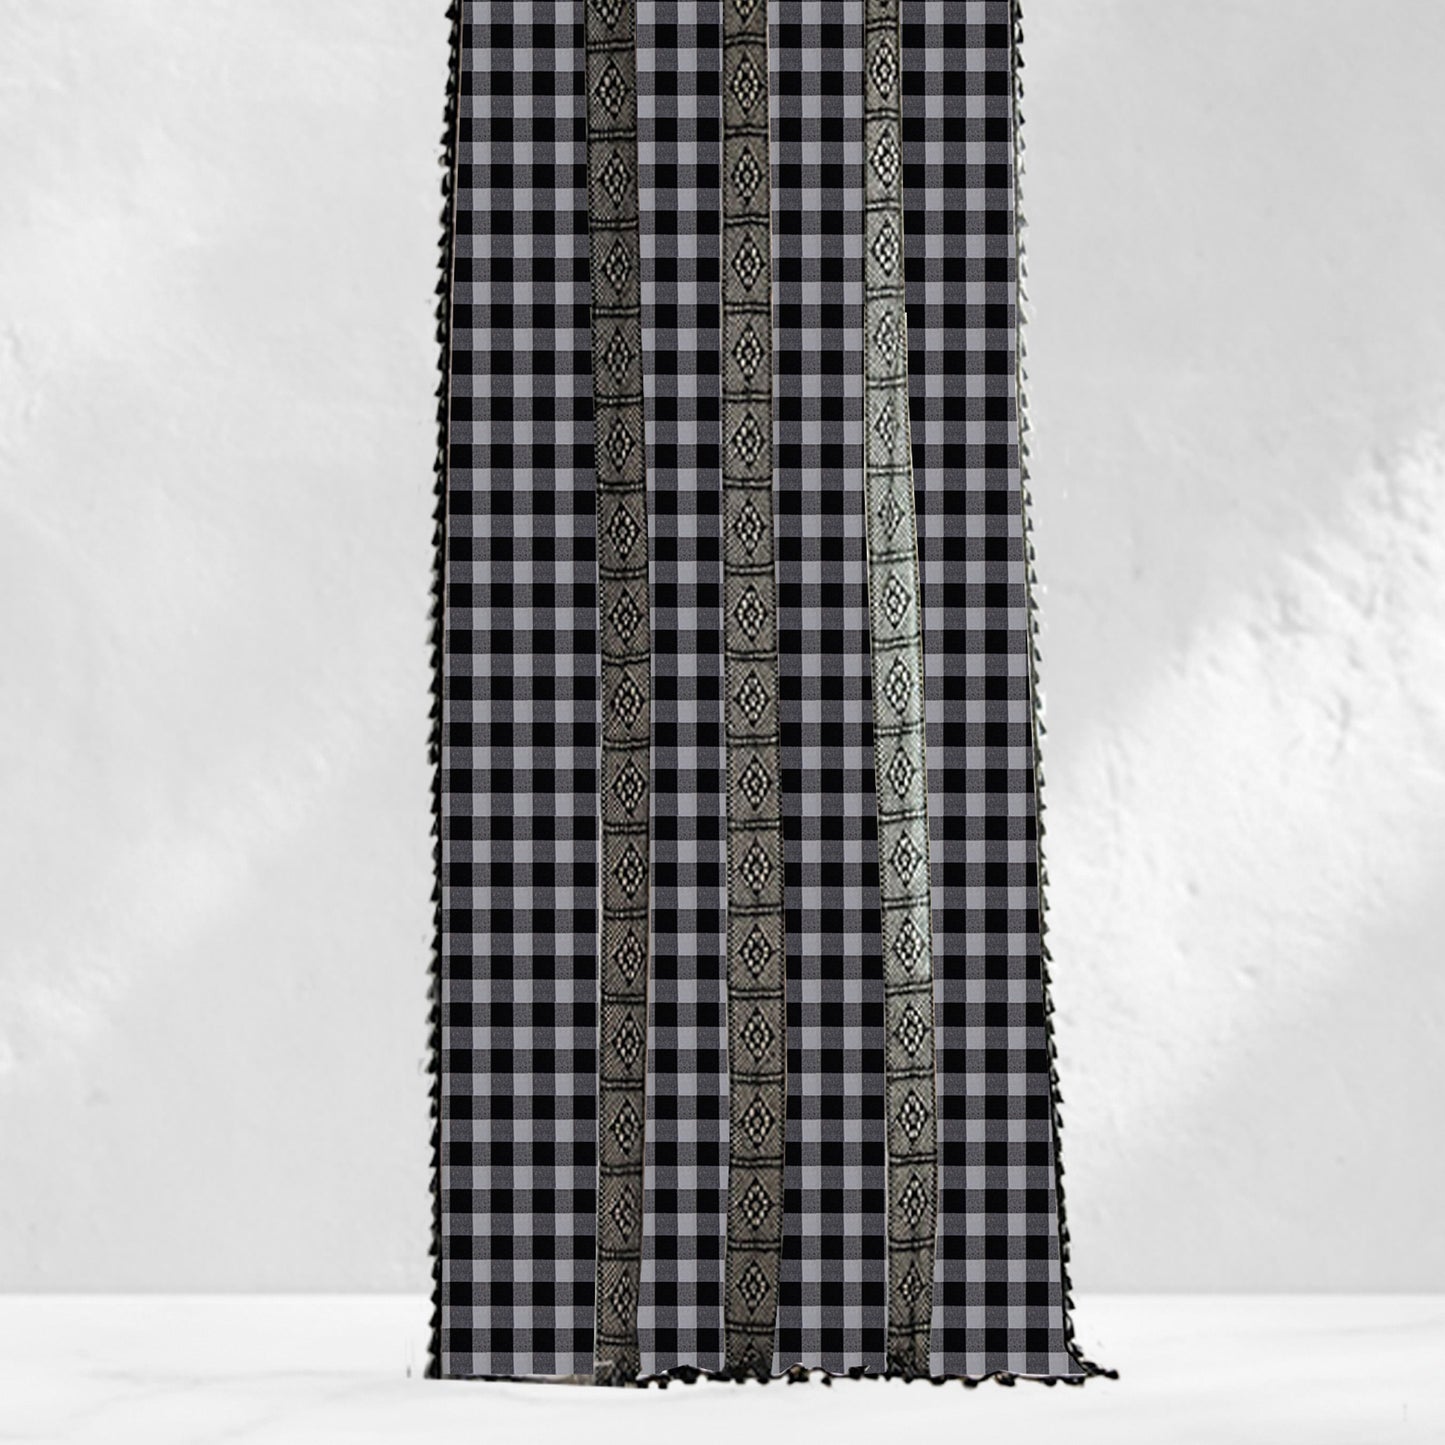 Black Gingham Plaid Crochet Curtains